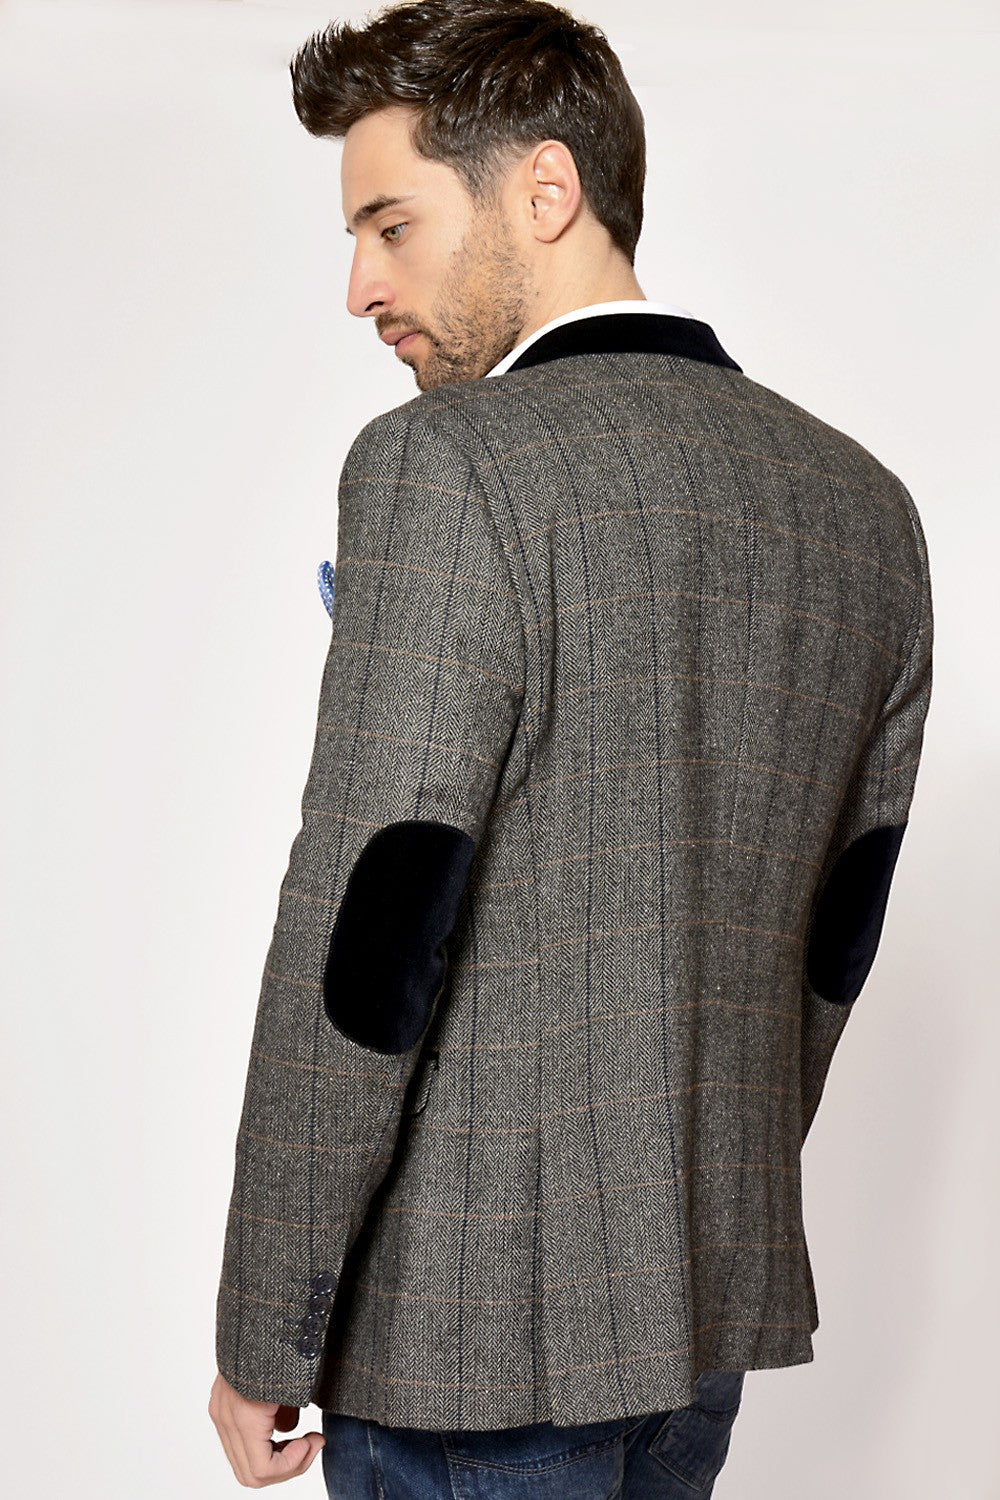 Dx7 Heritage Tweed Check Blazer By Marc Darcy London - Spirit Clothing